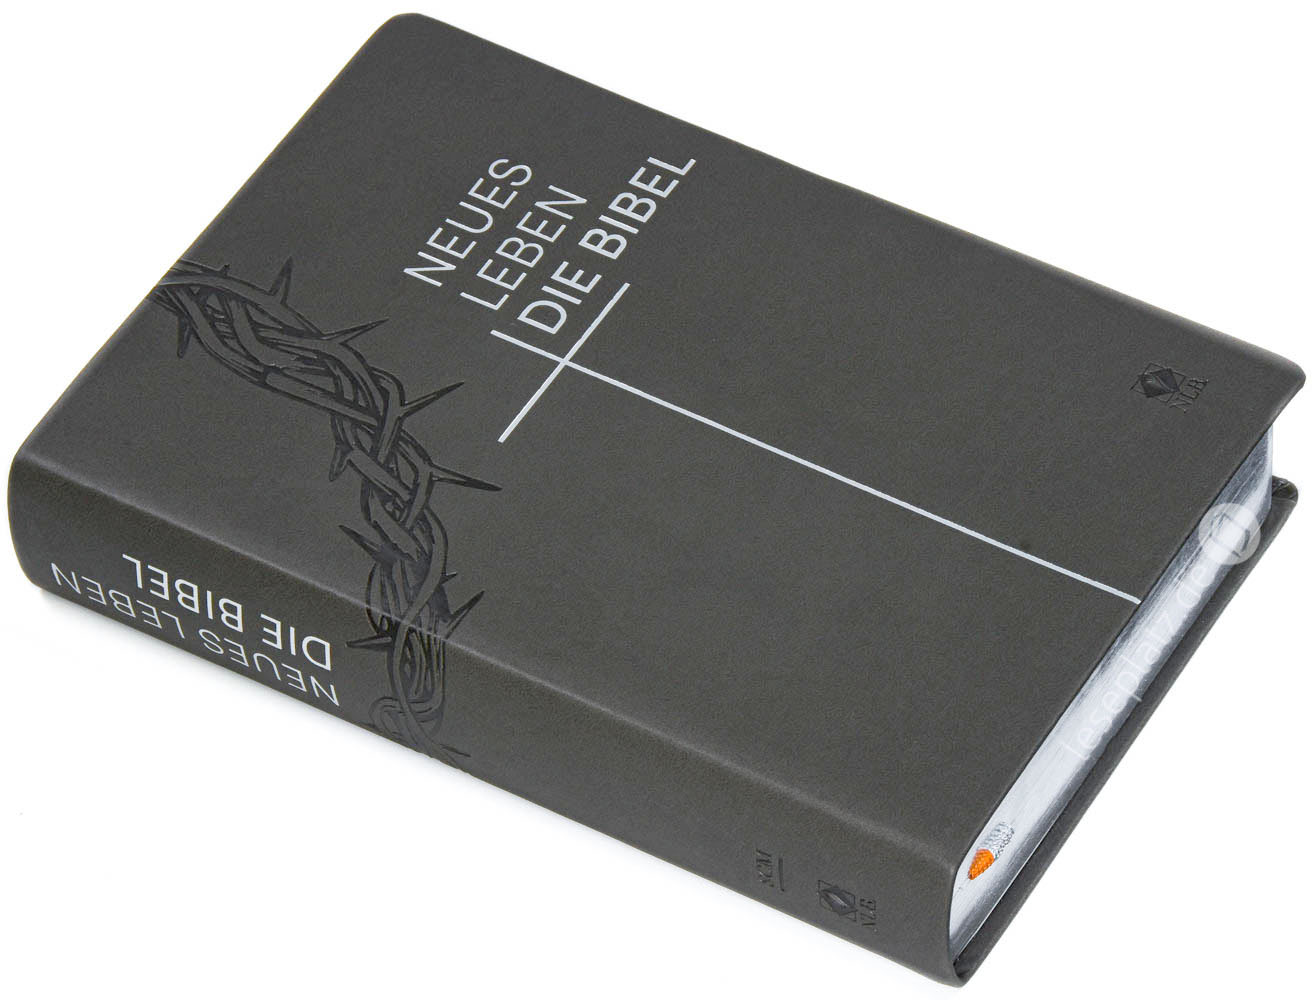 Neues Leben. Die Bibel - Standardausgabe - Kunstleder grau/ Silberschnitt